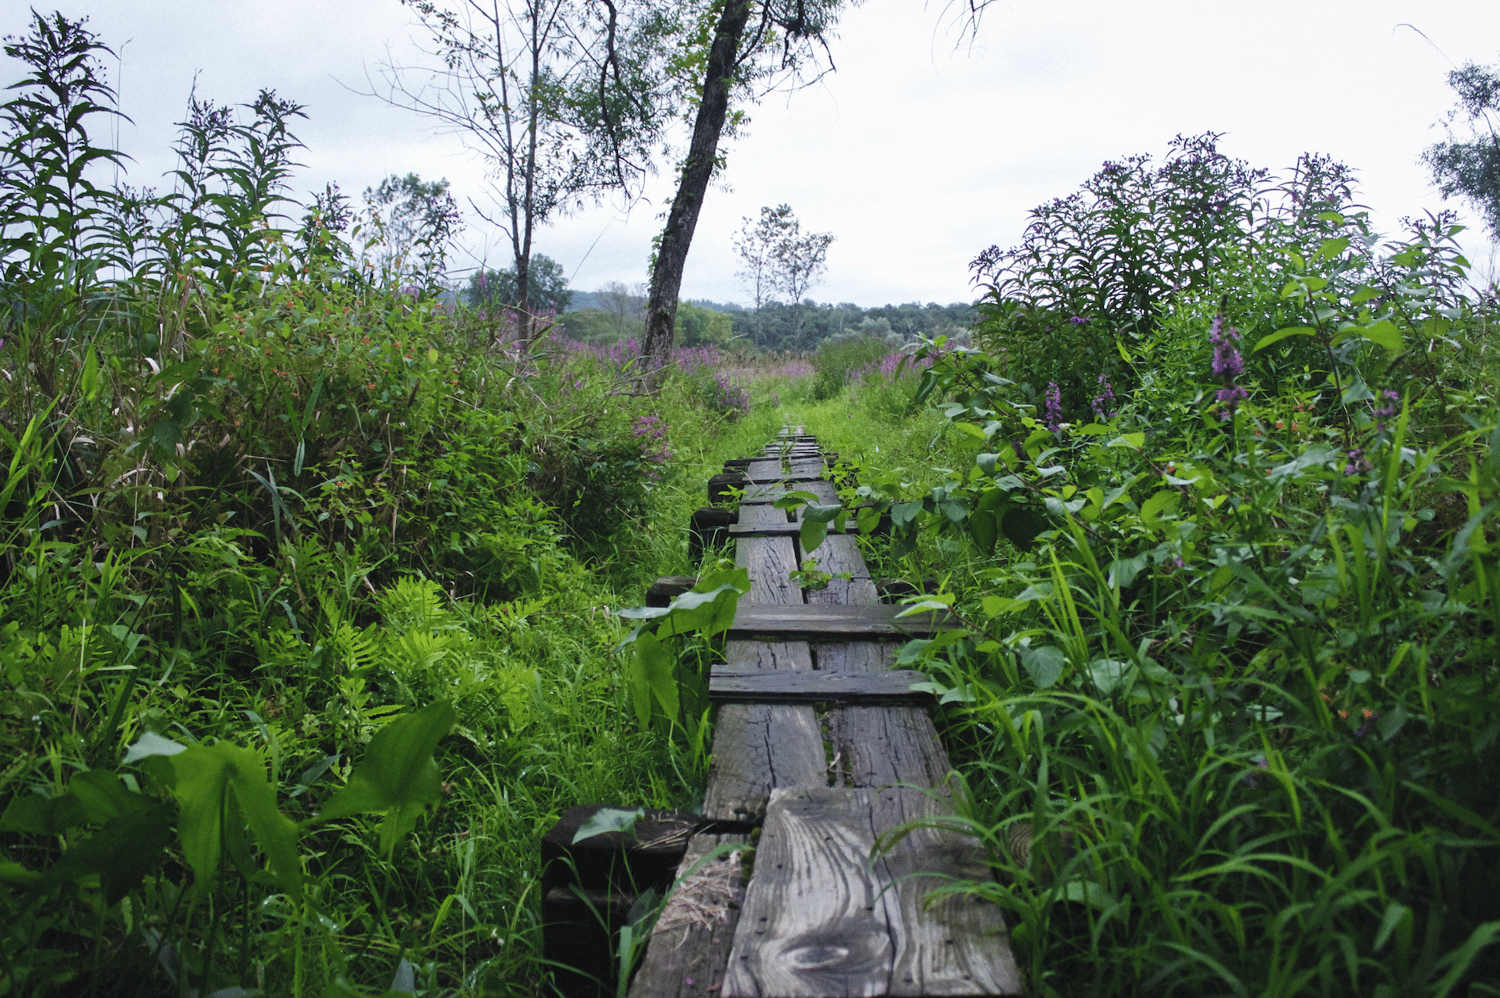 Image of Overgrown Appalachian Trail